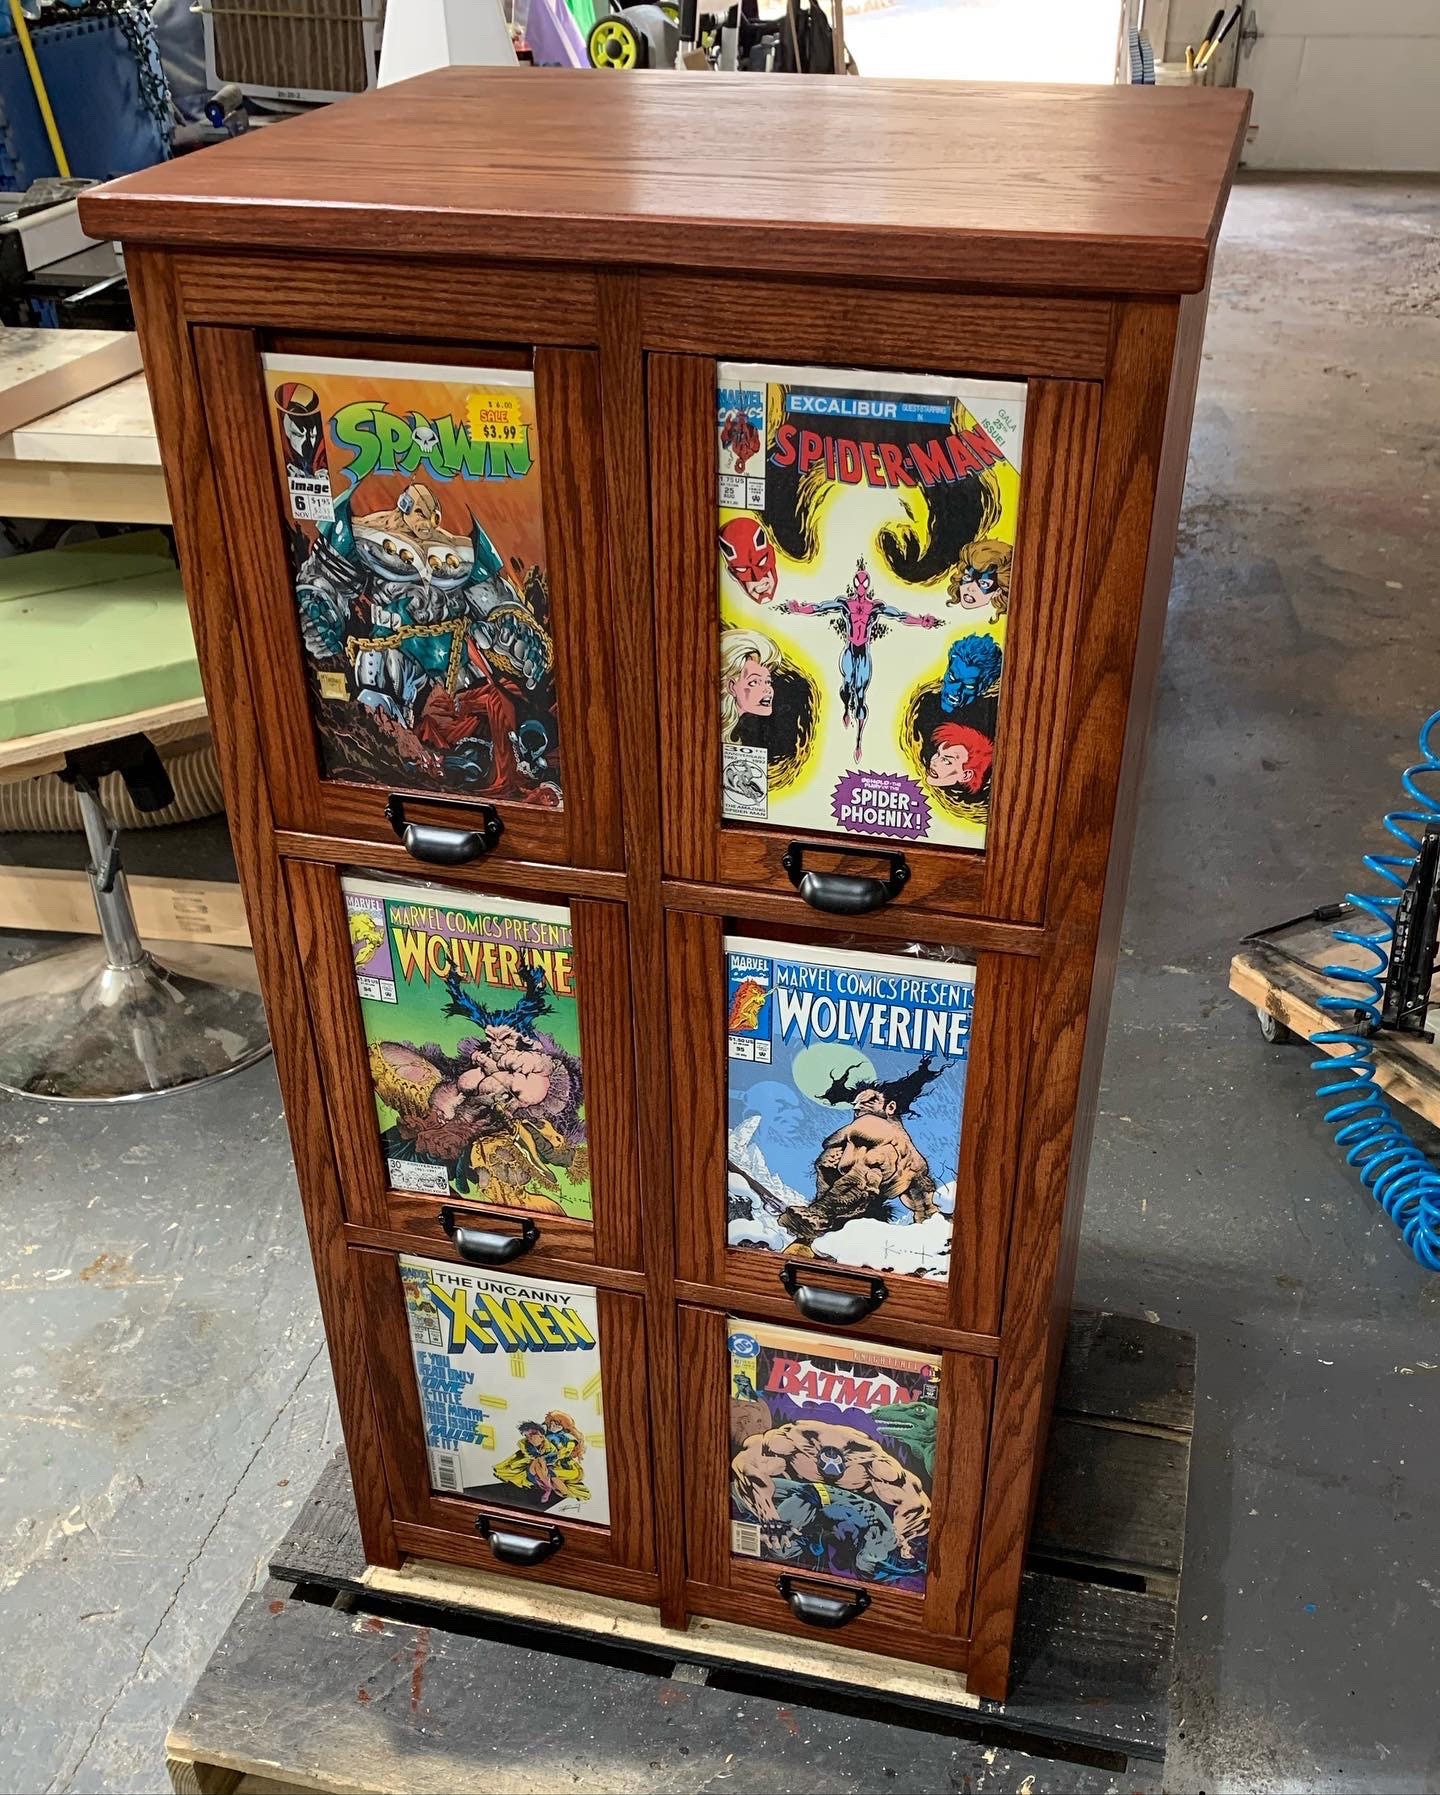 UniKeep - Comic Book Organizer Kits, Storage for Comics 